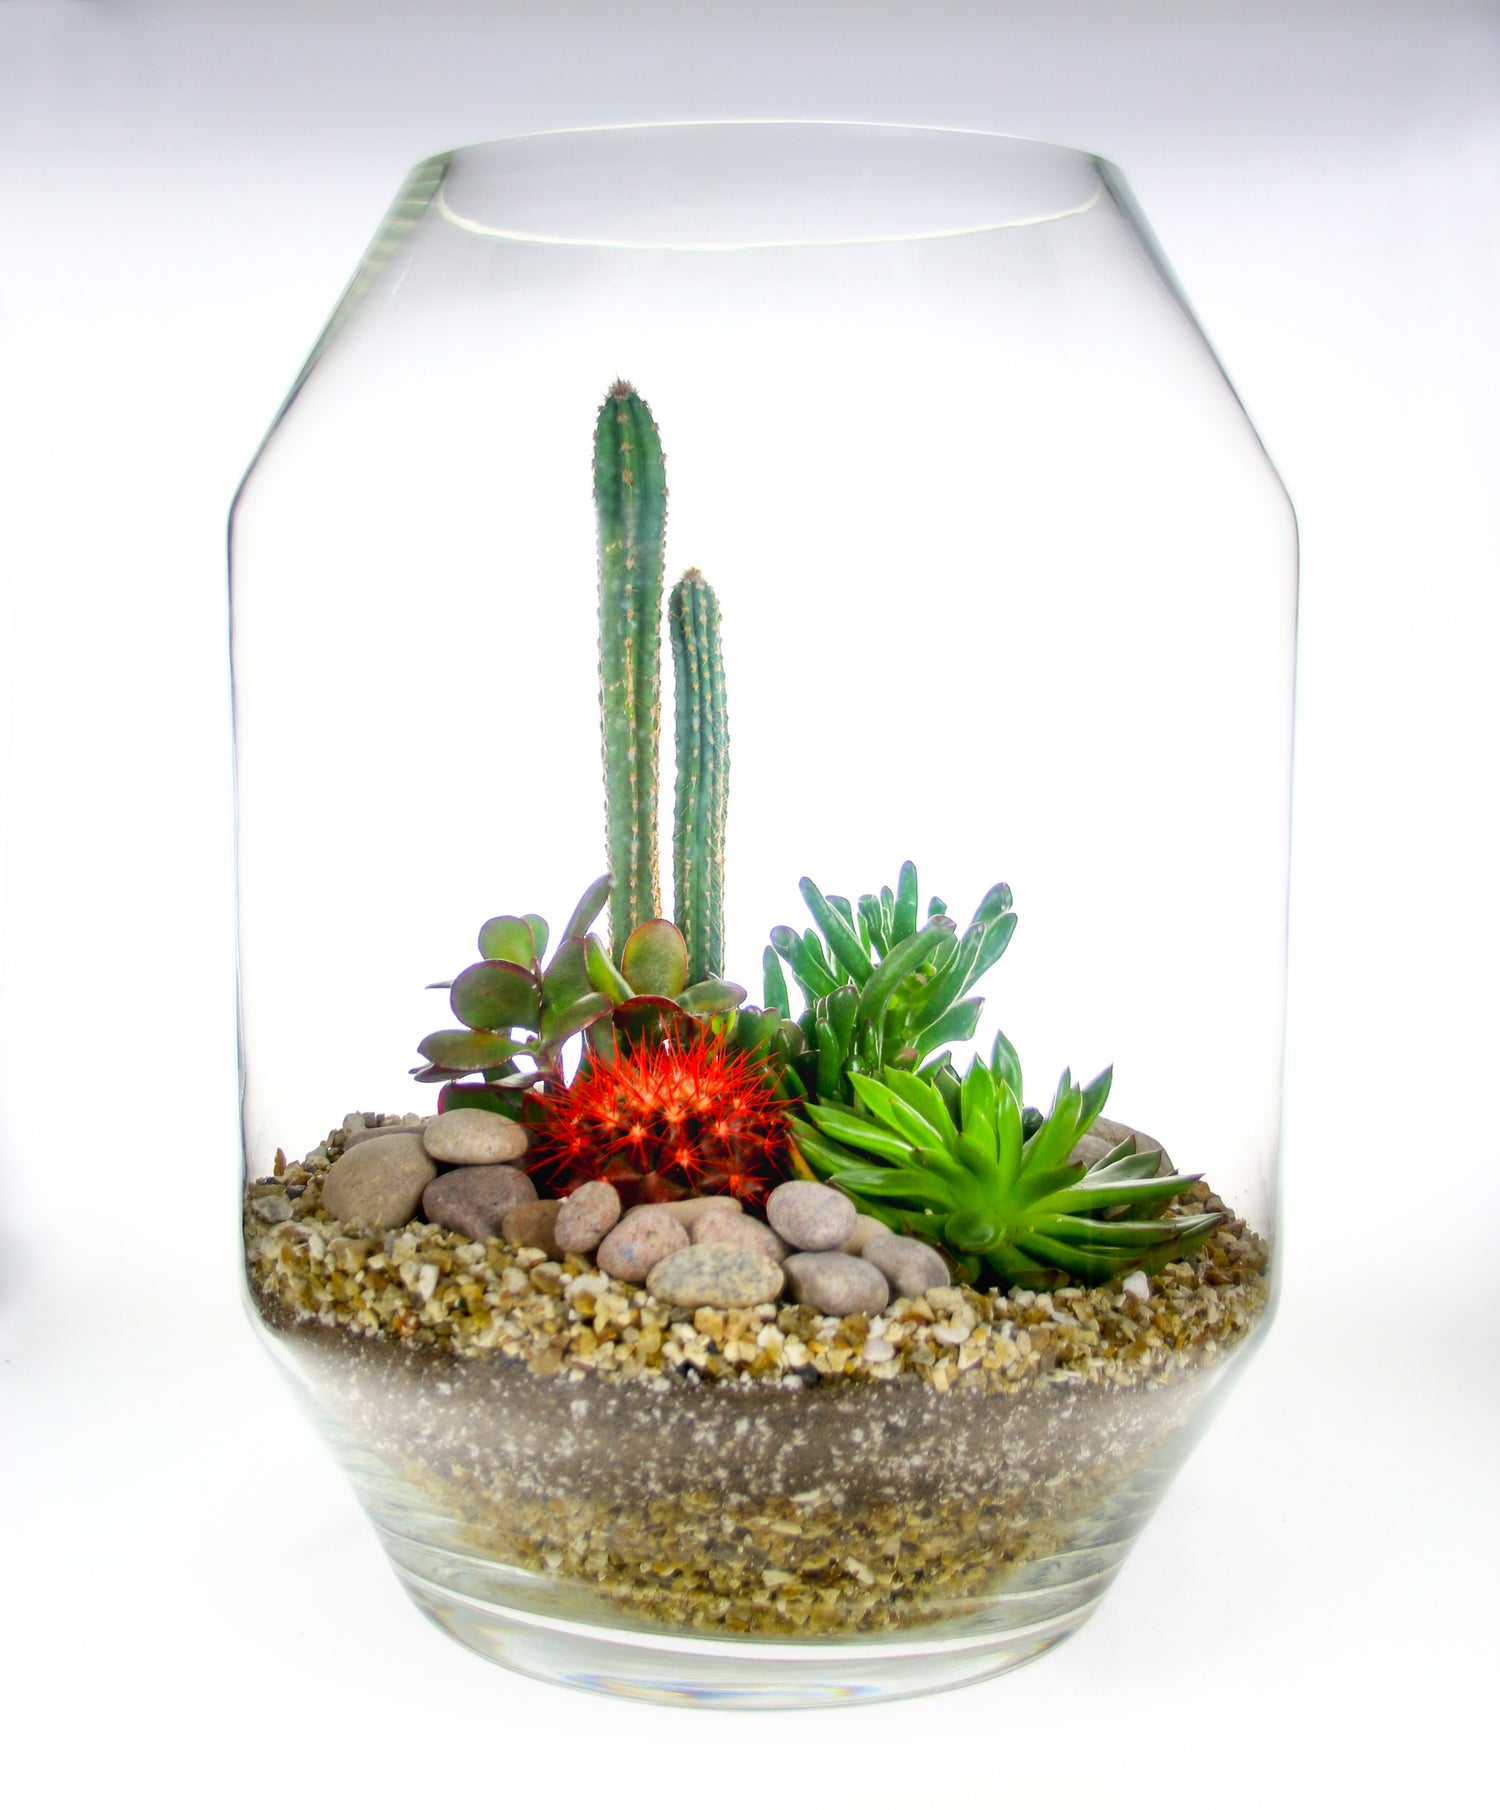 Terrarium kit with succulent and cacti house plants